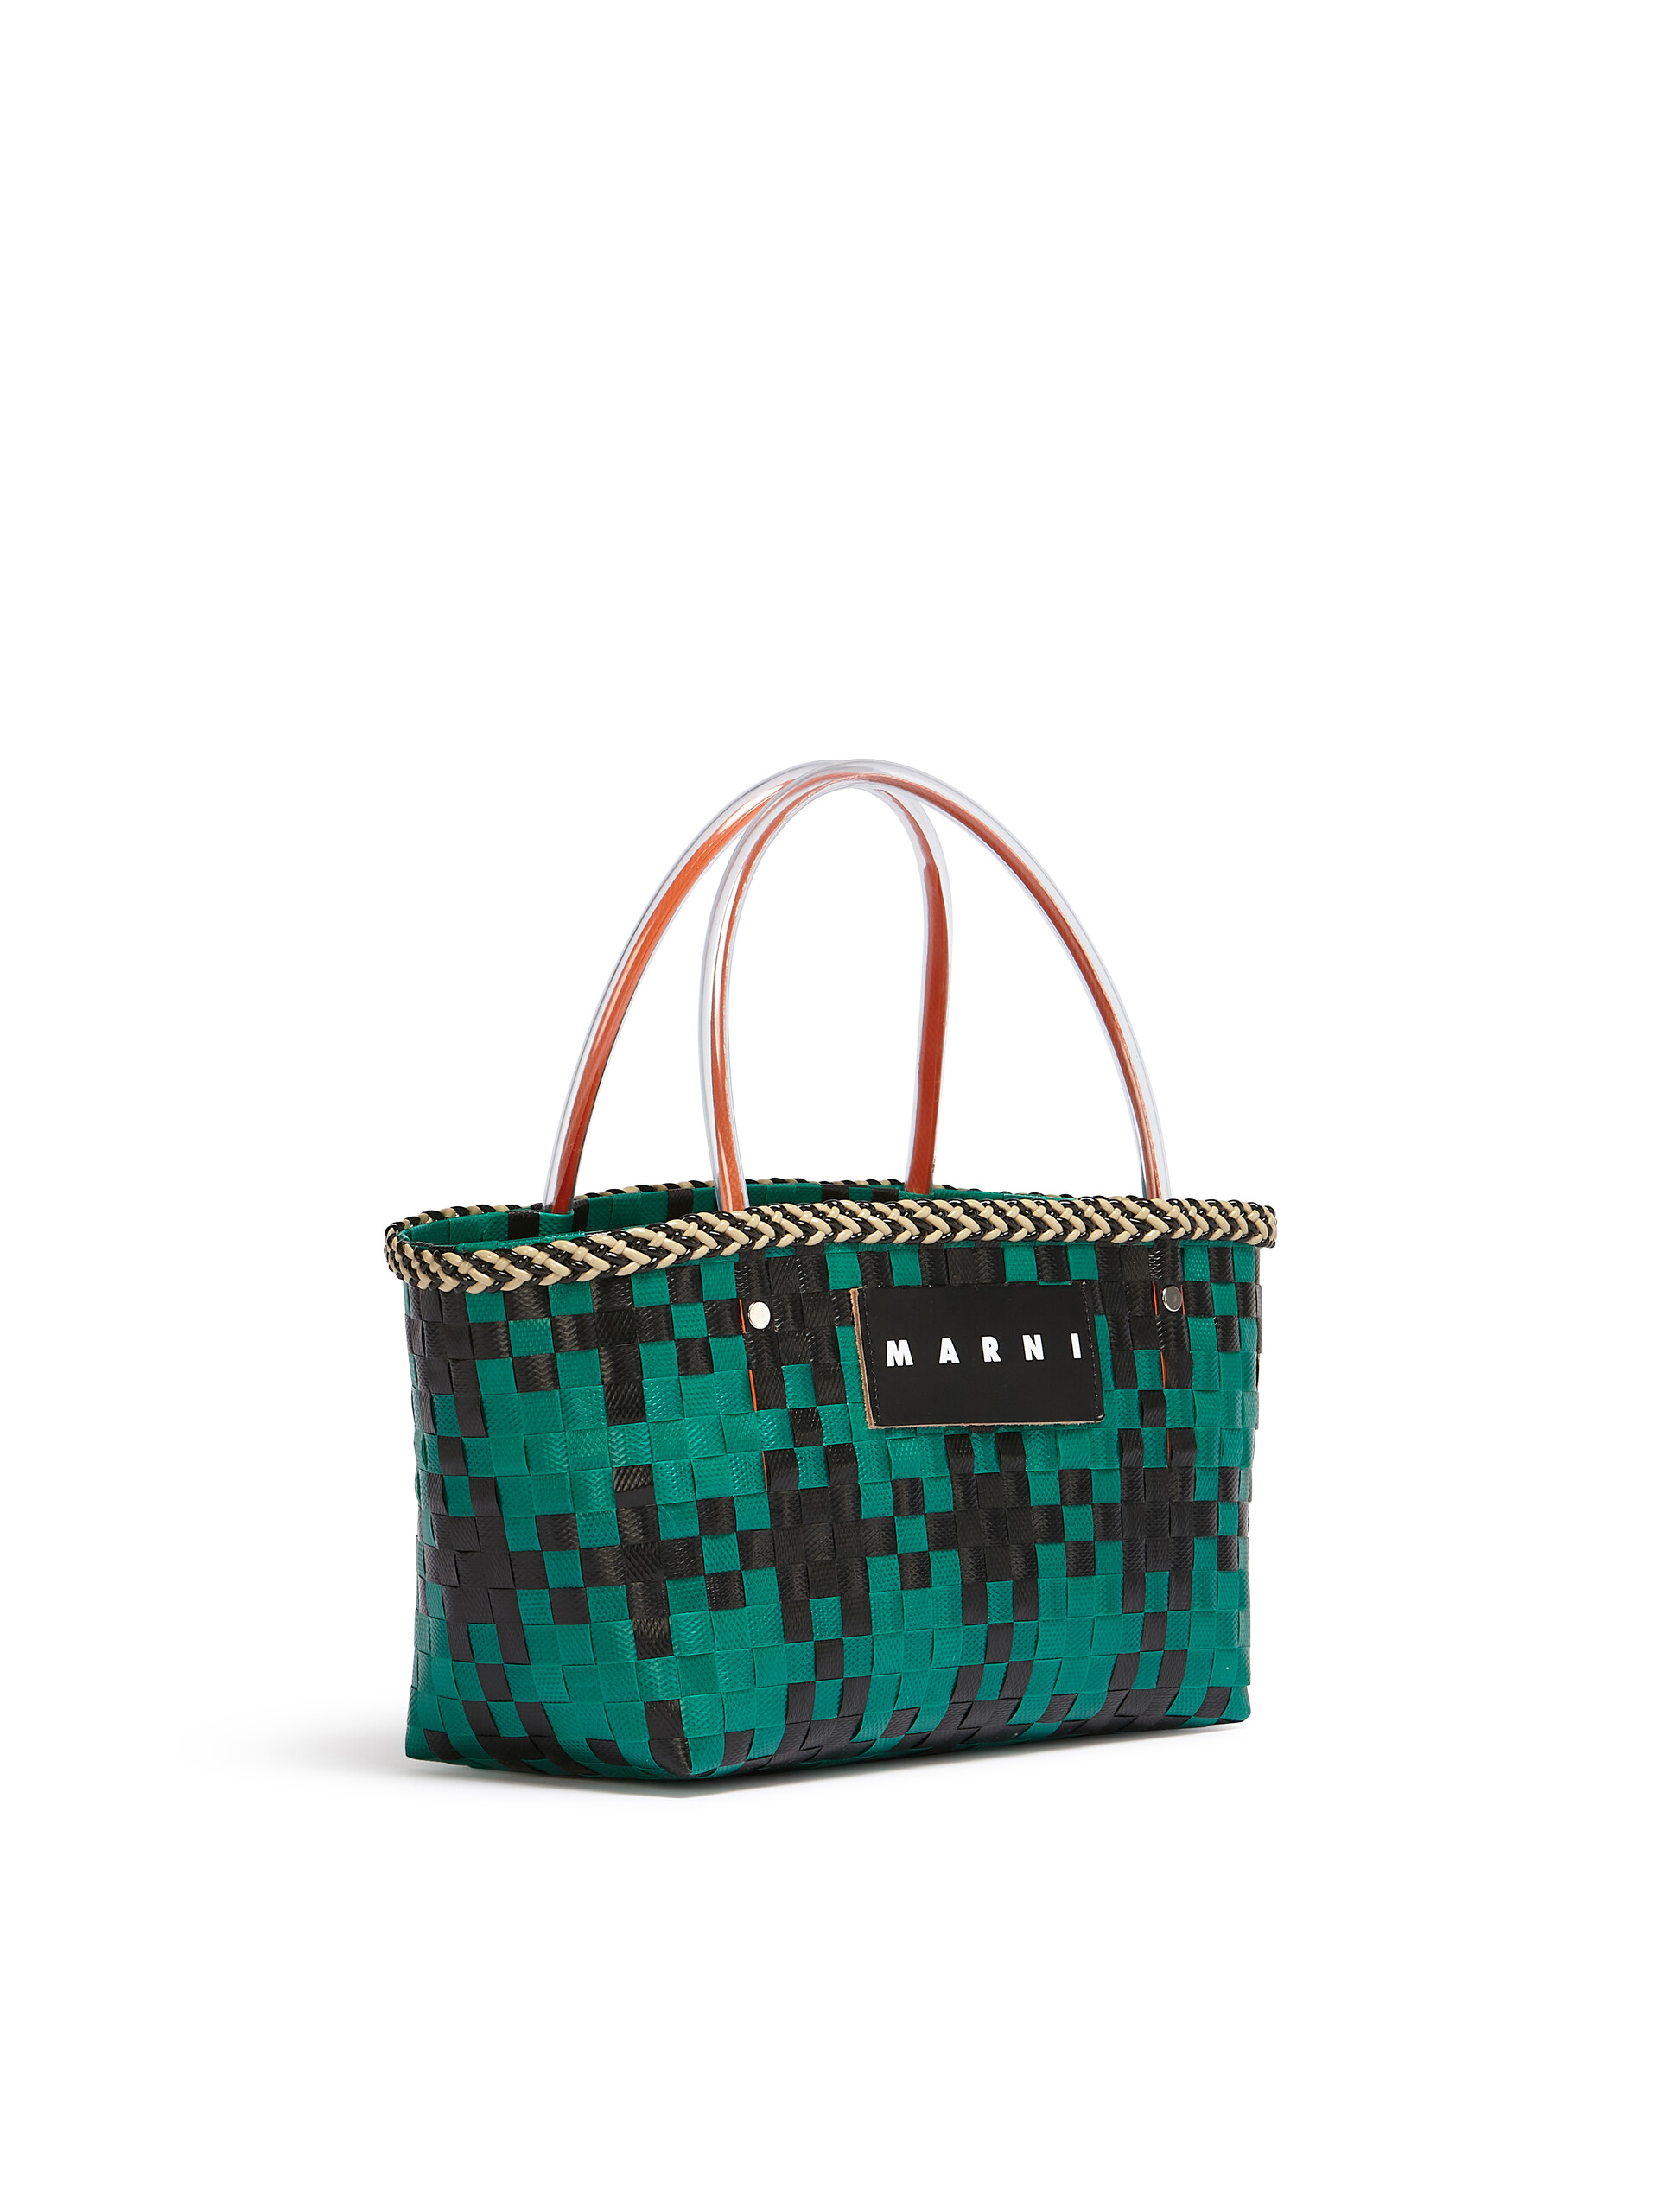 MARNI MARKET CHECK BAG in black and green tartan woven material - Bags - Image 2